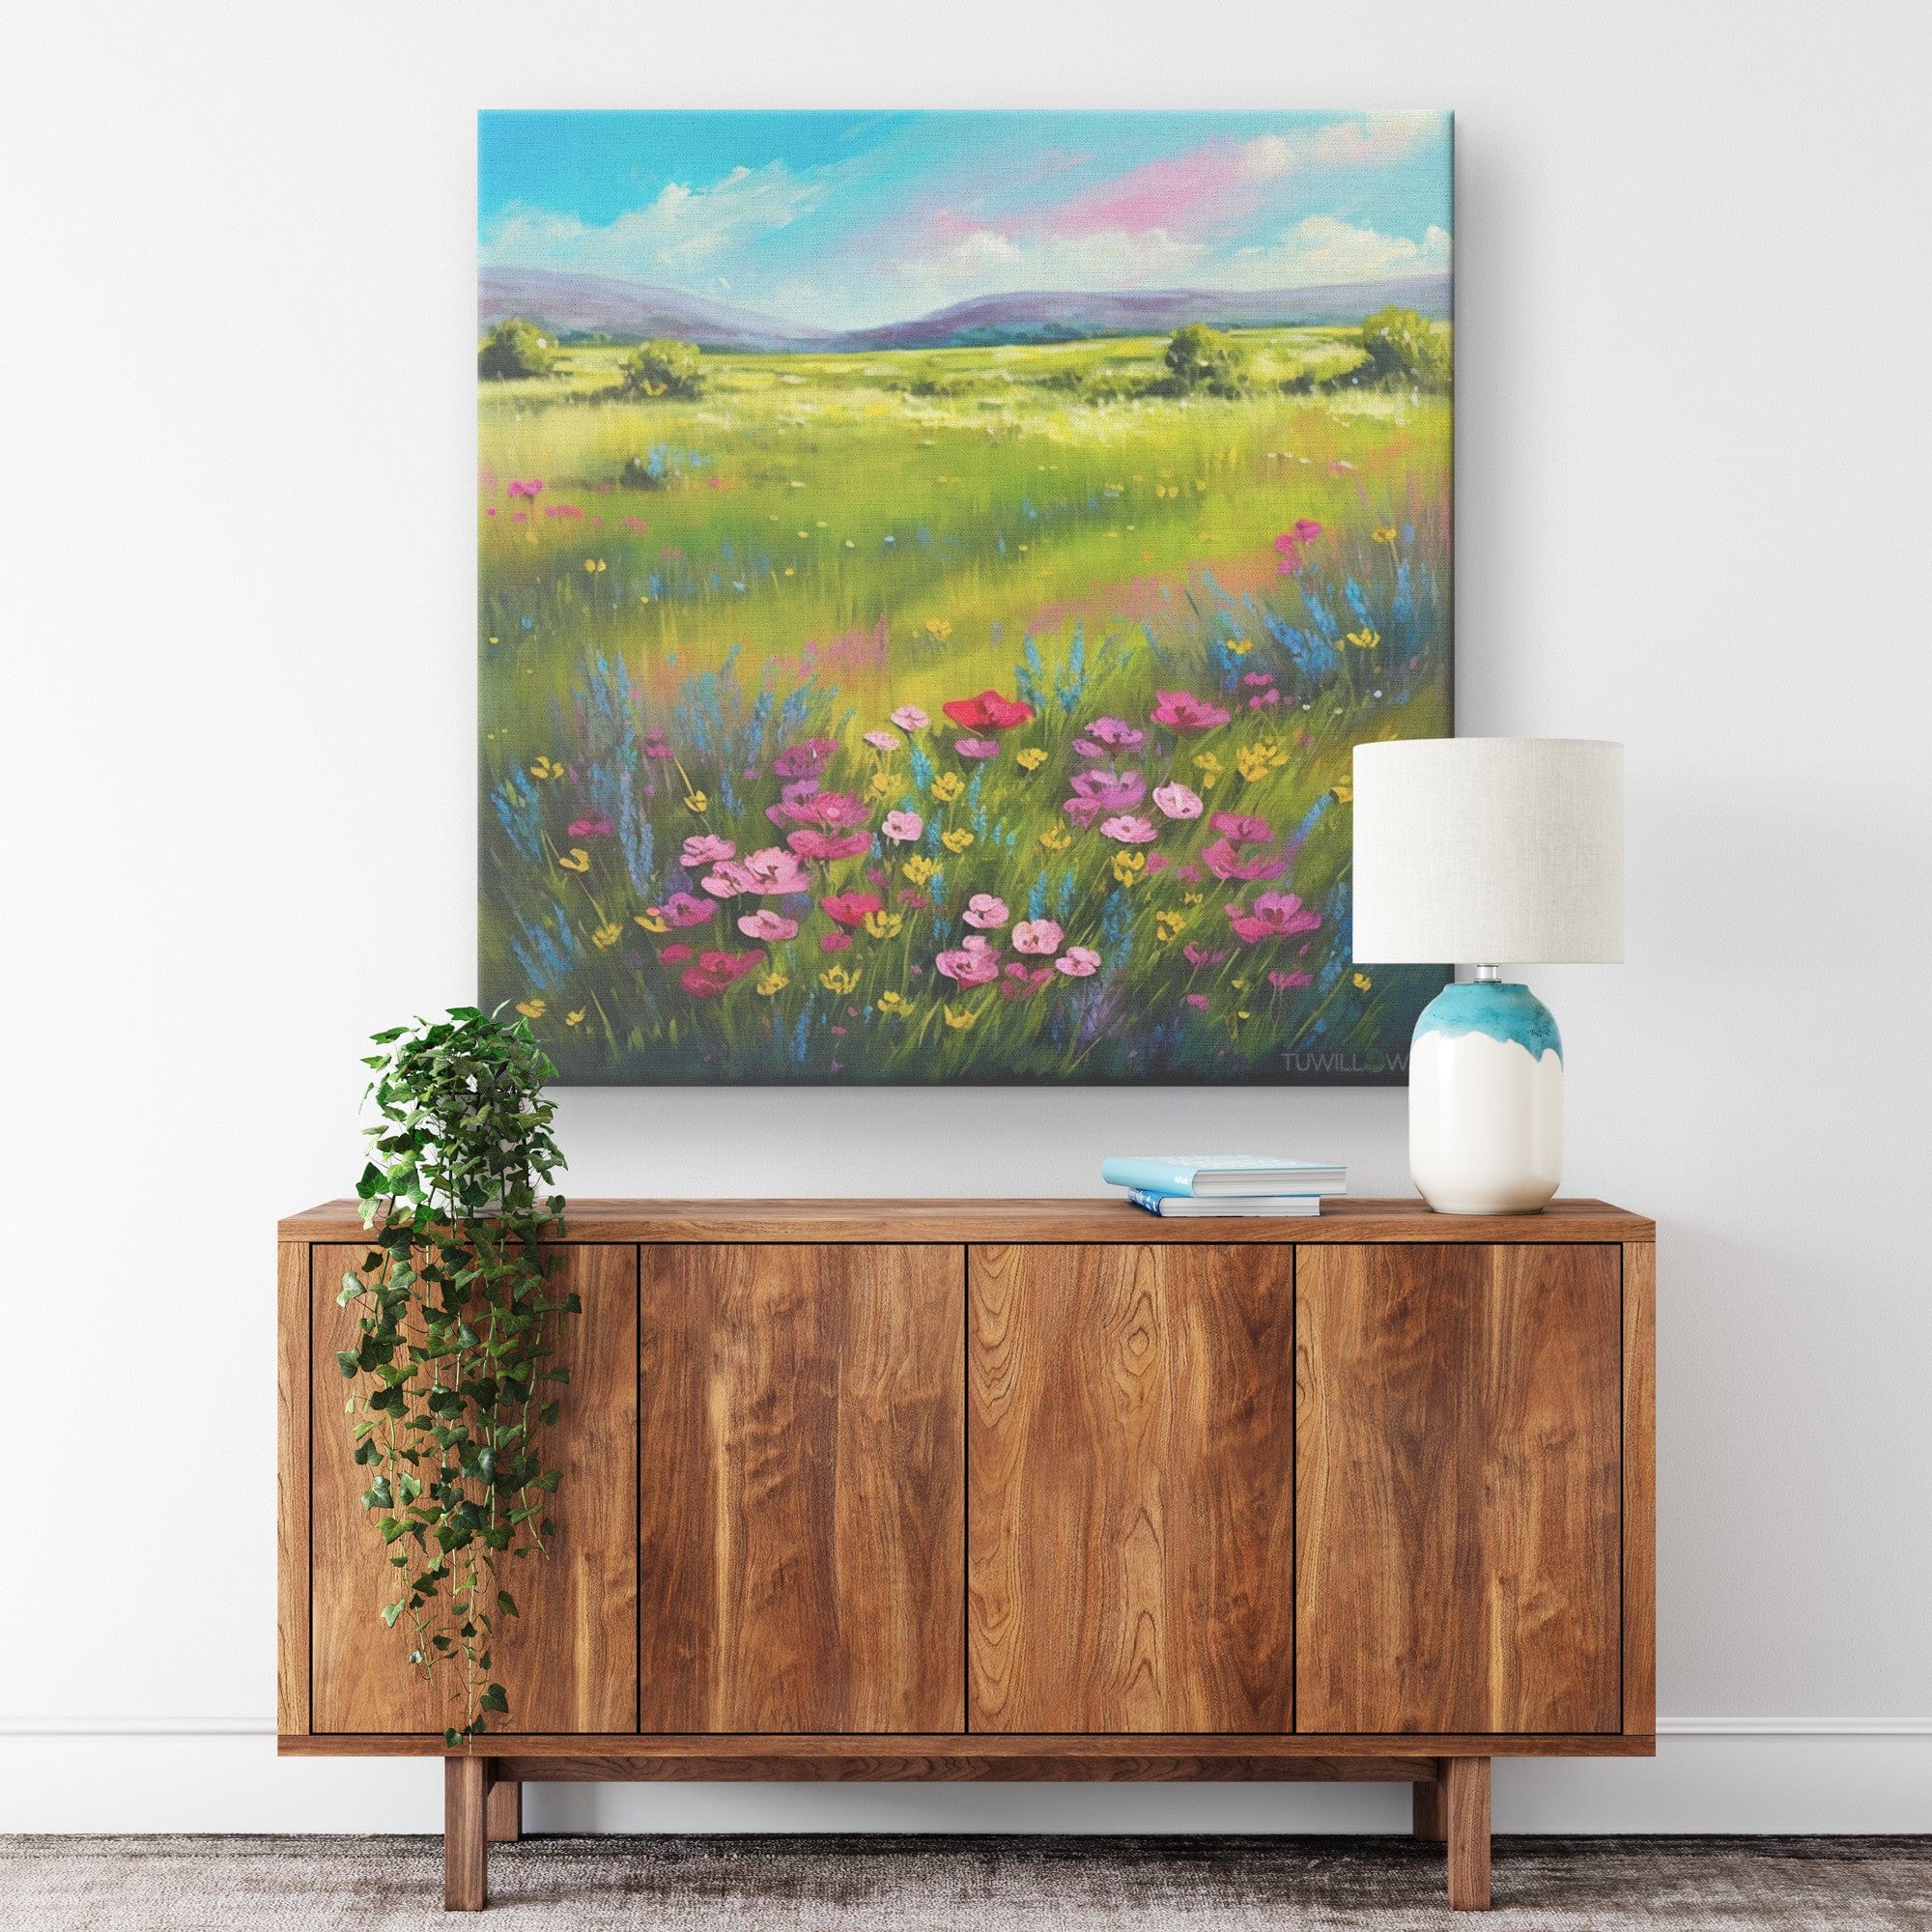 Wildflower Meadow - Canvas Print Wall Art - TuWillows